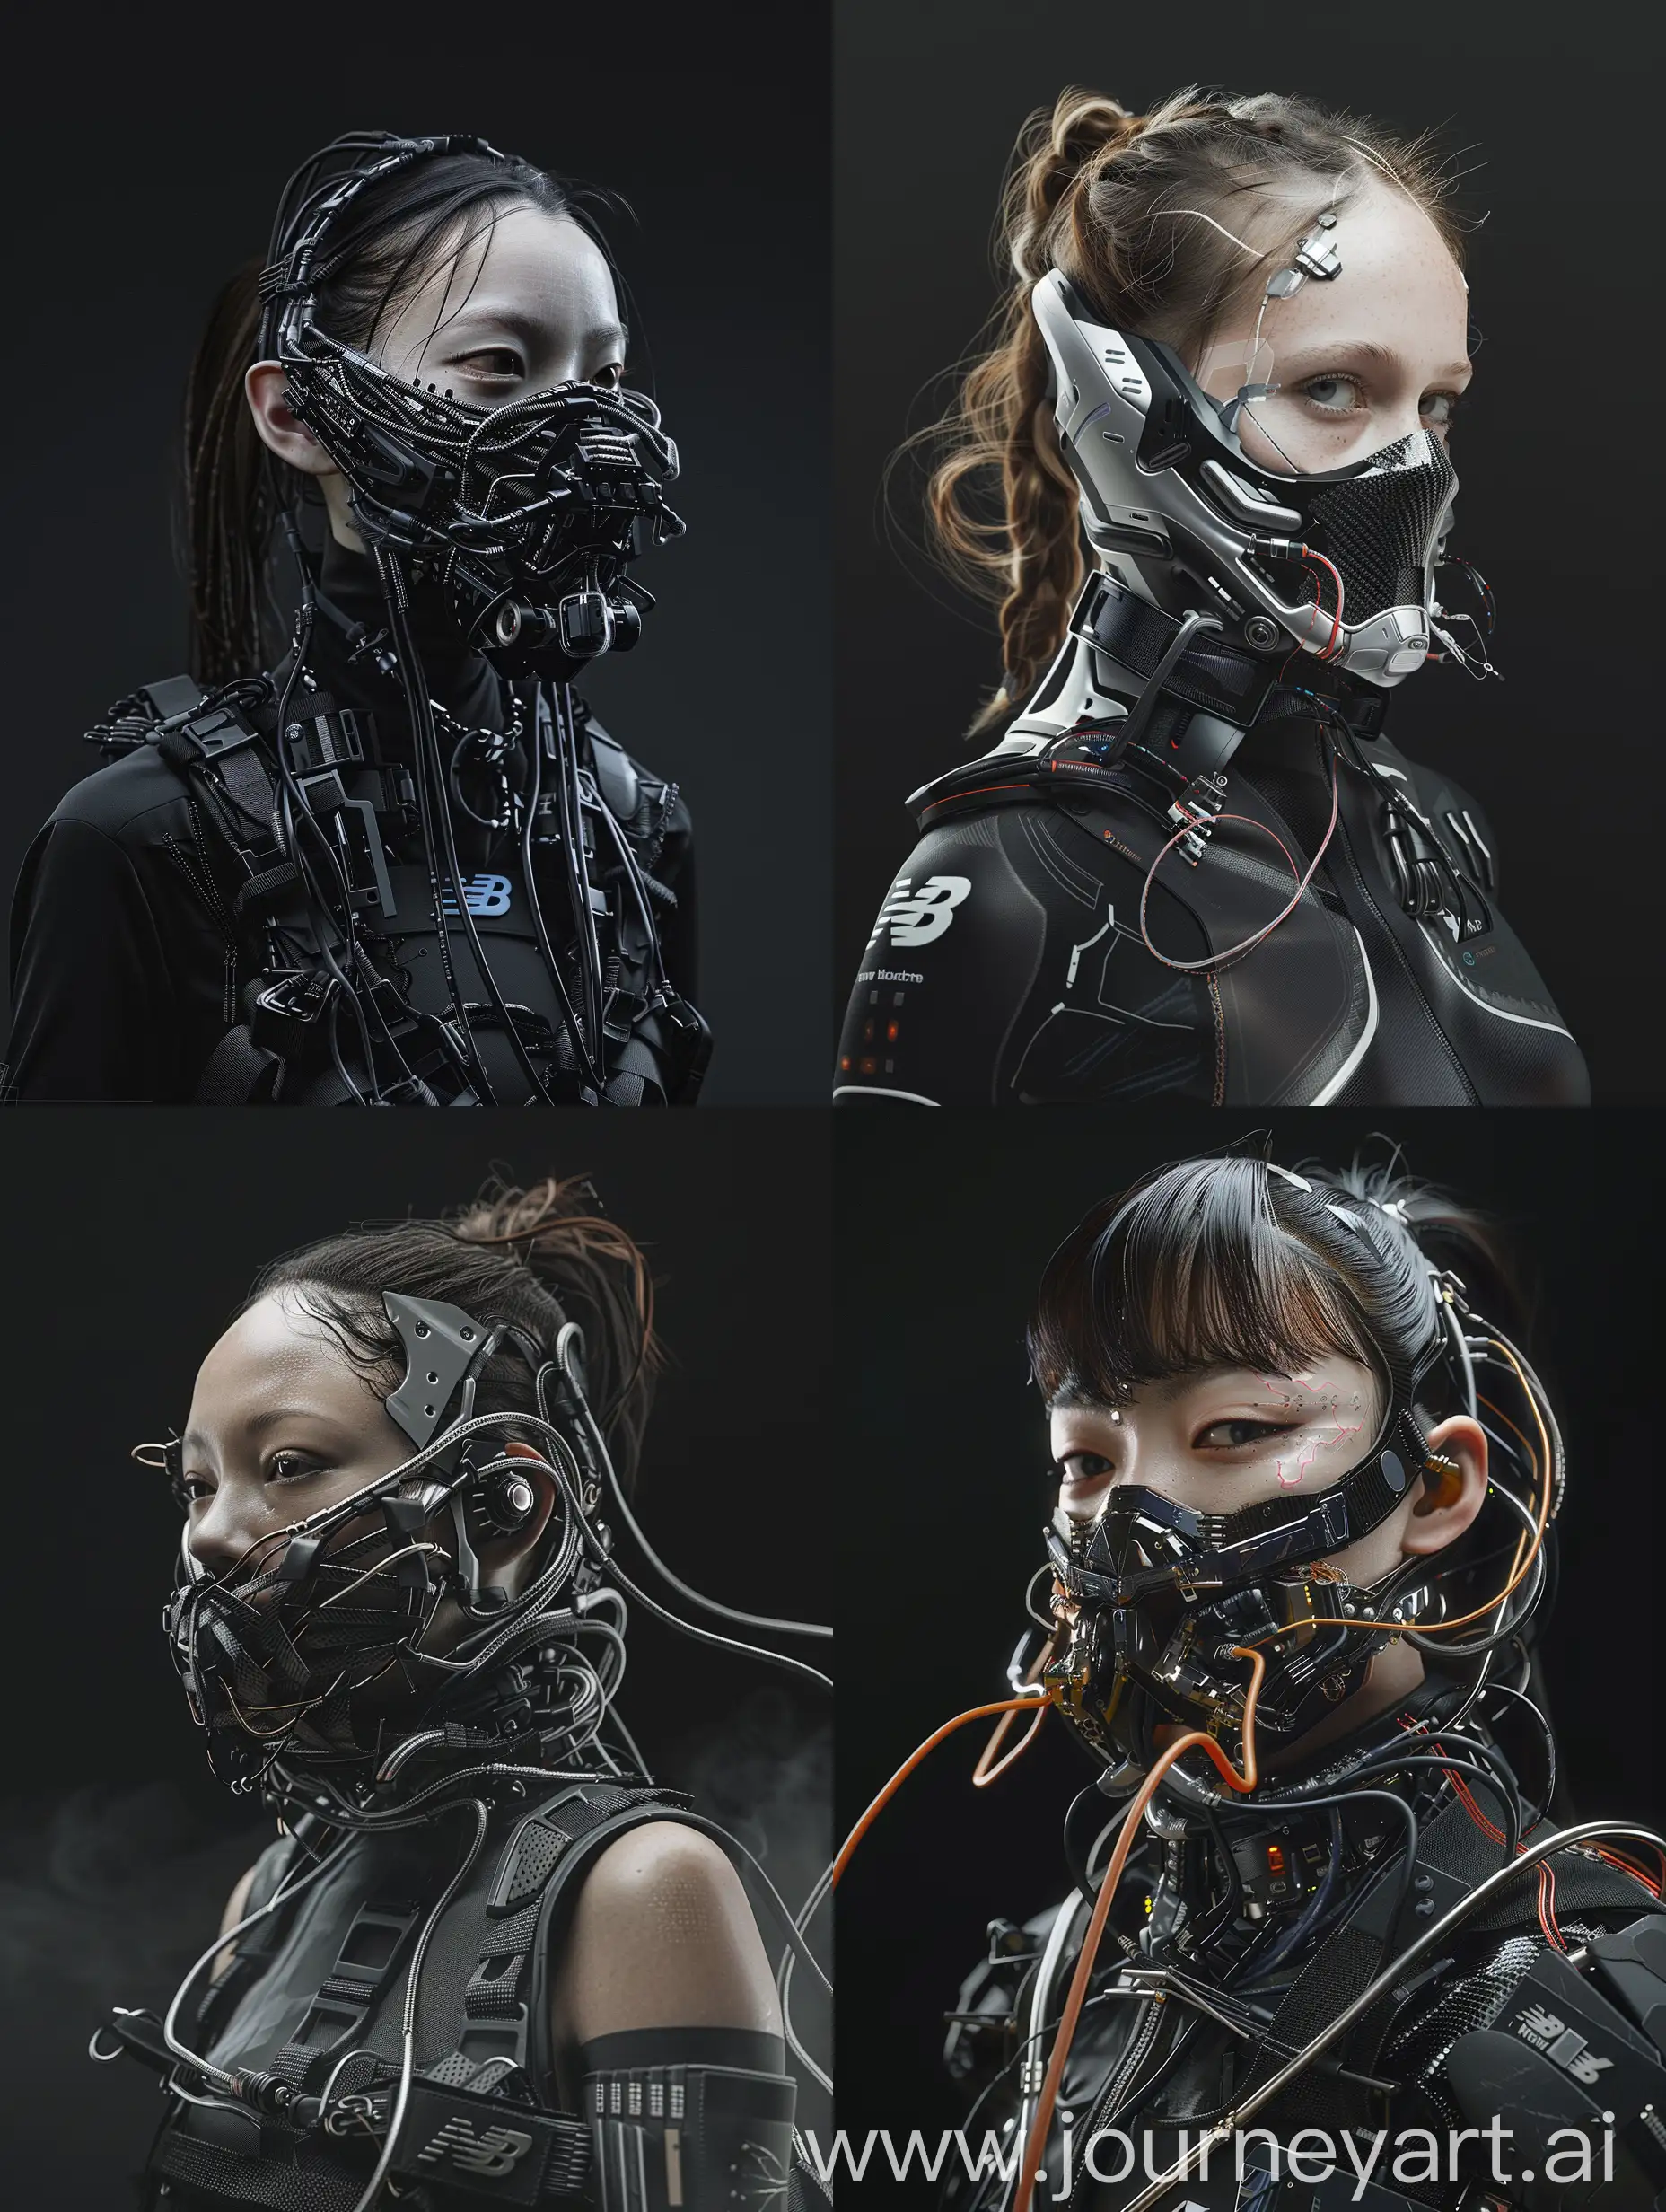 Futuristic-Cyberpunk-Woman-with-Carbon-Fiber-Mask